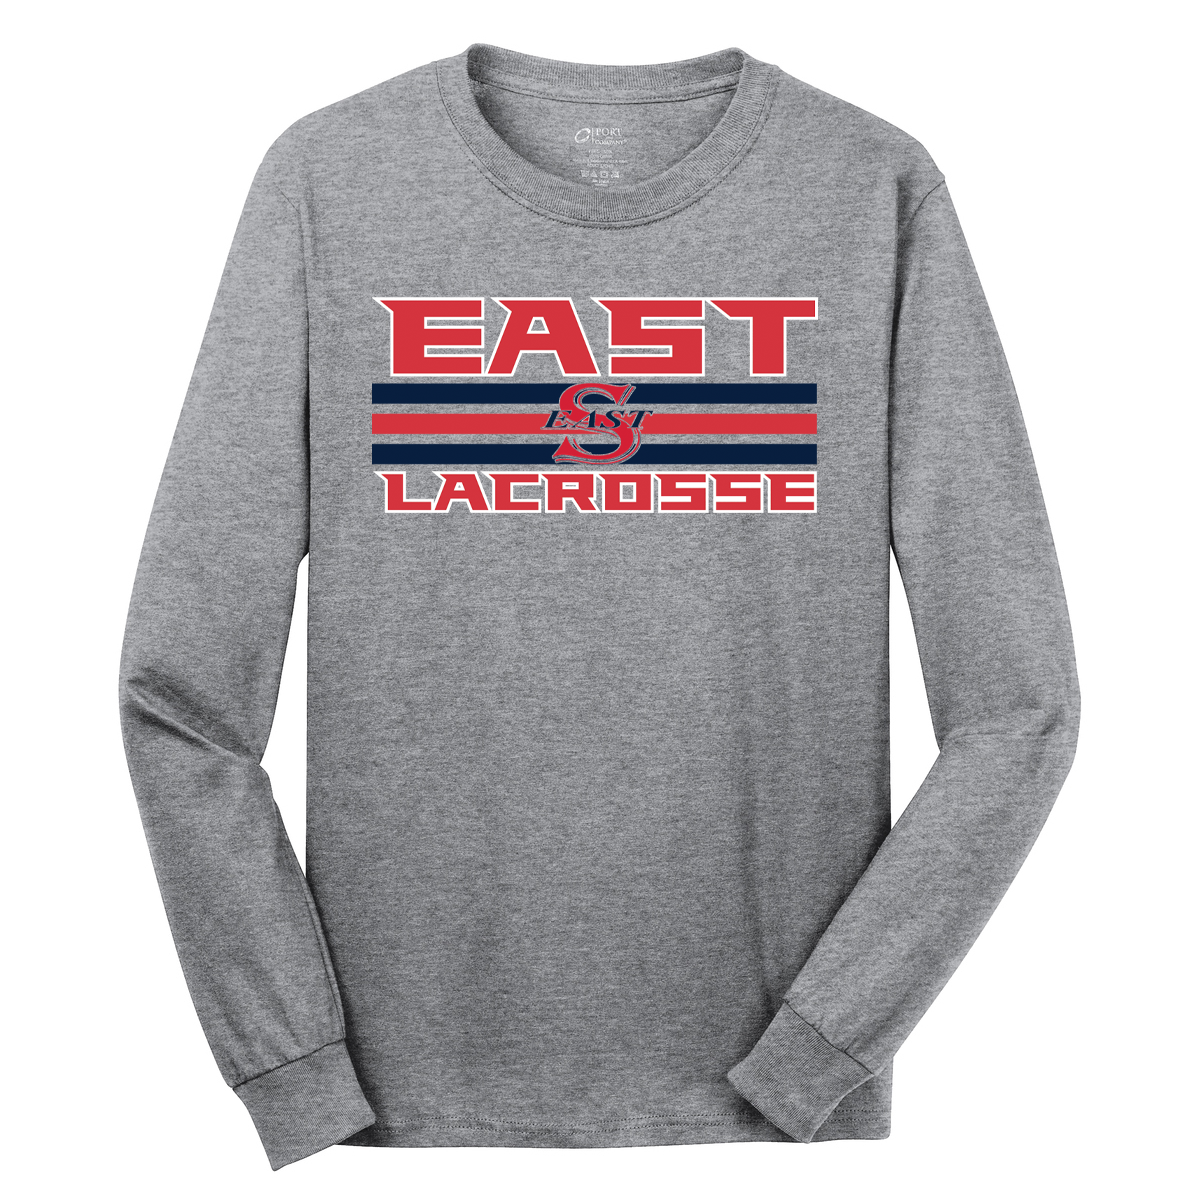 Smithtown East Girls Lacrosse Cotton Long Sleeve Shirt